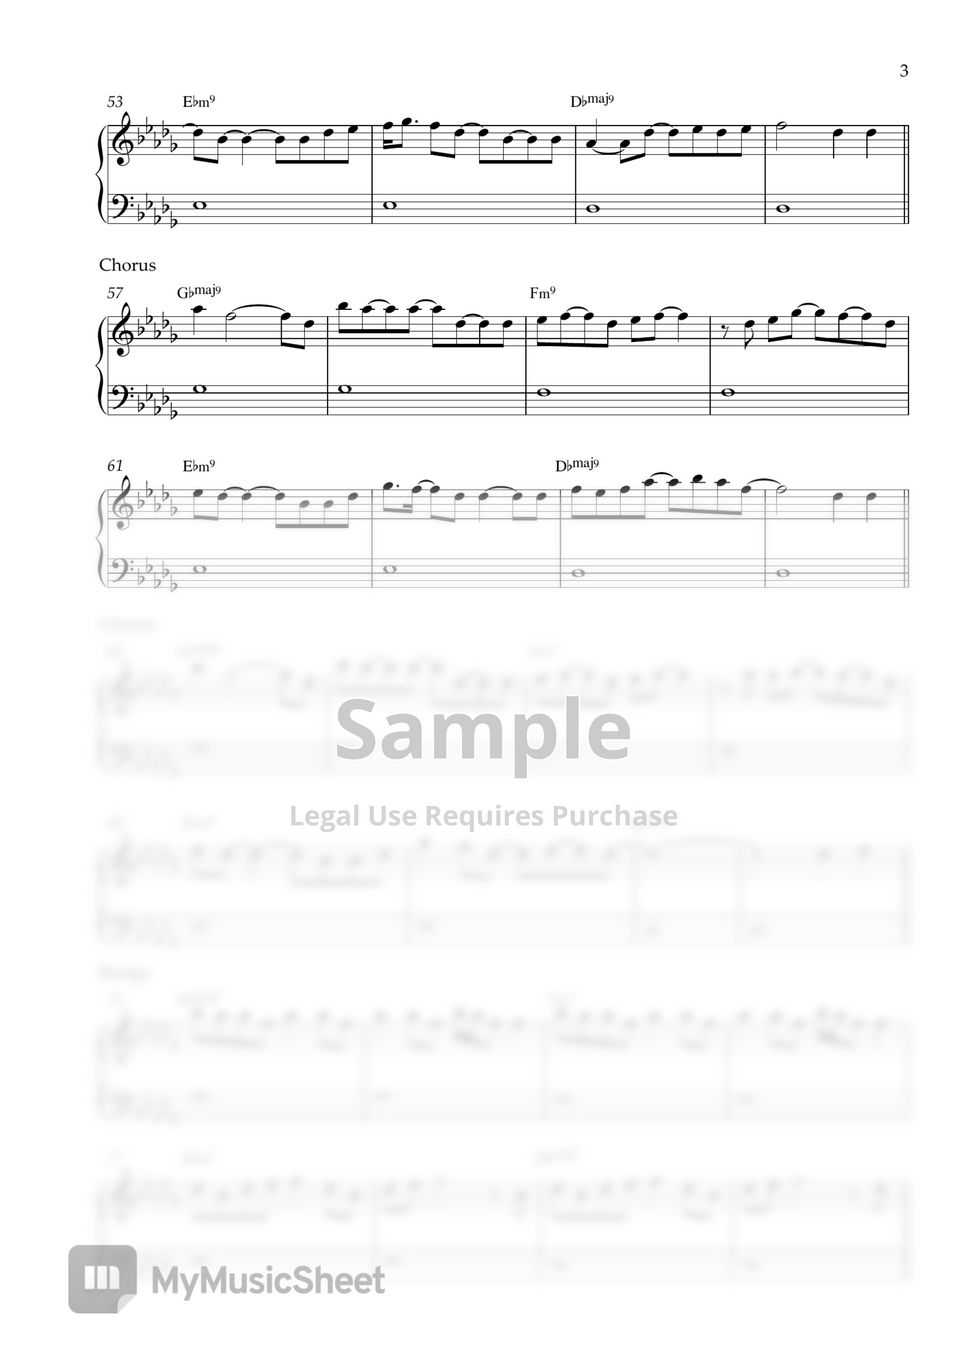 Jimin - Alone (Piano Sheet) Sheets by Pianella Piano